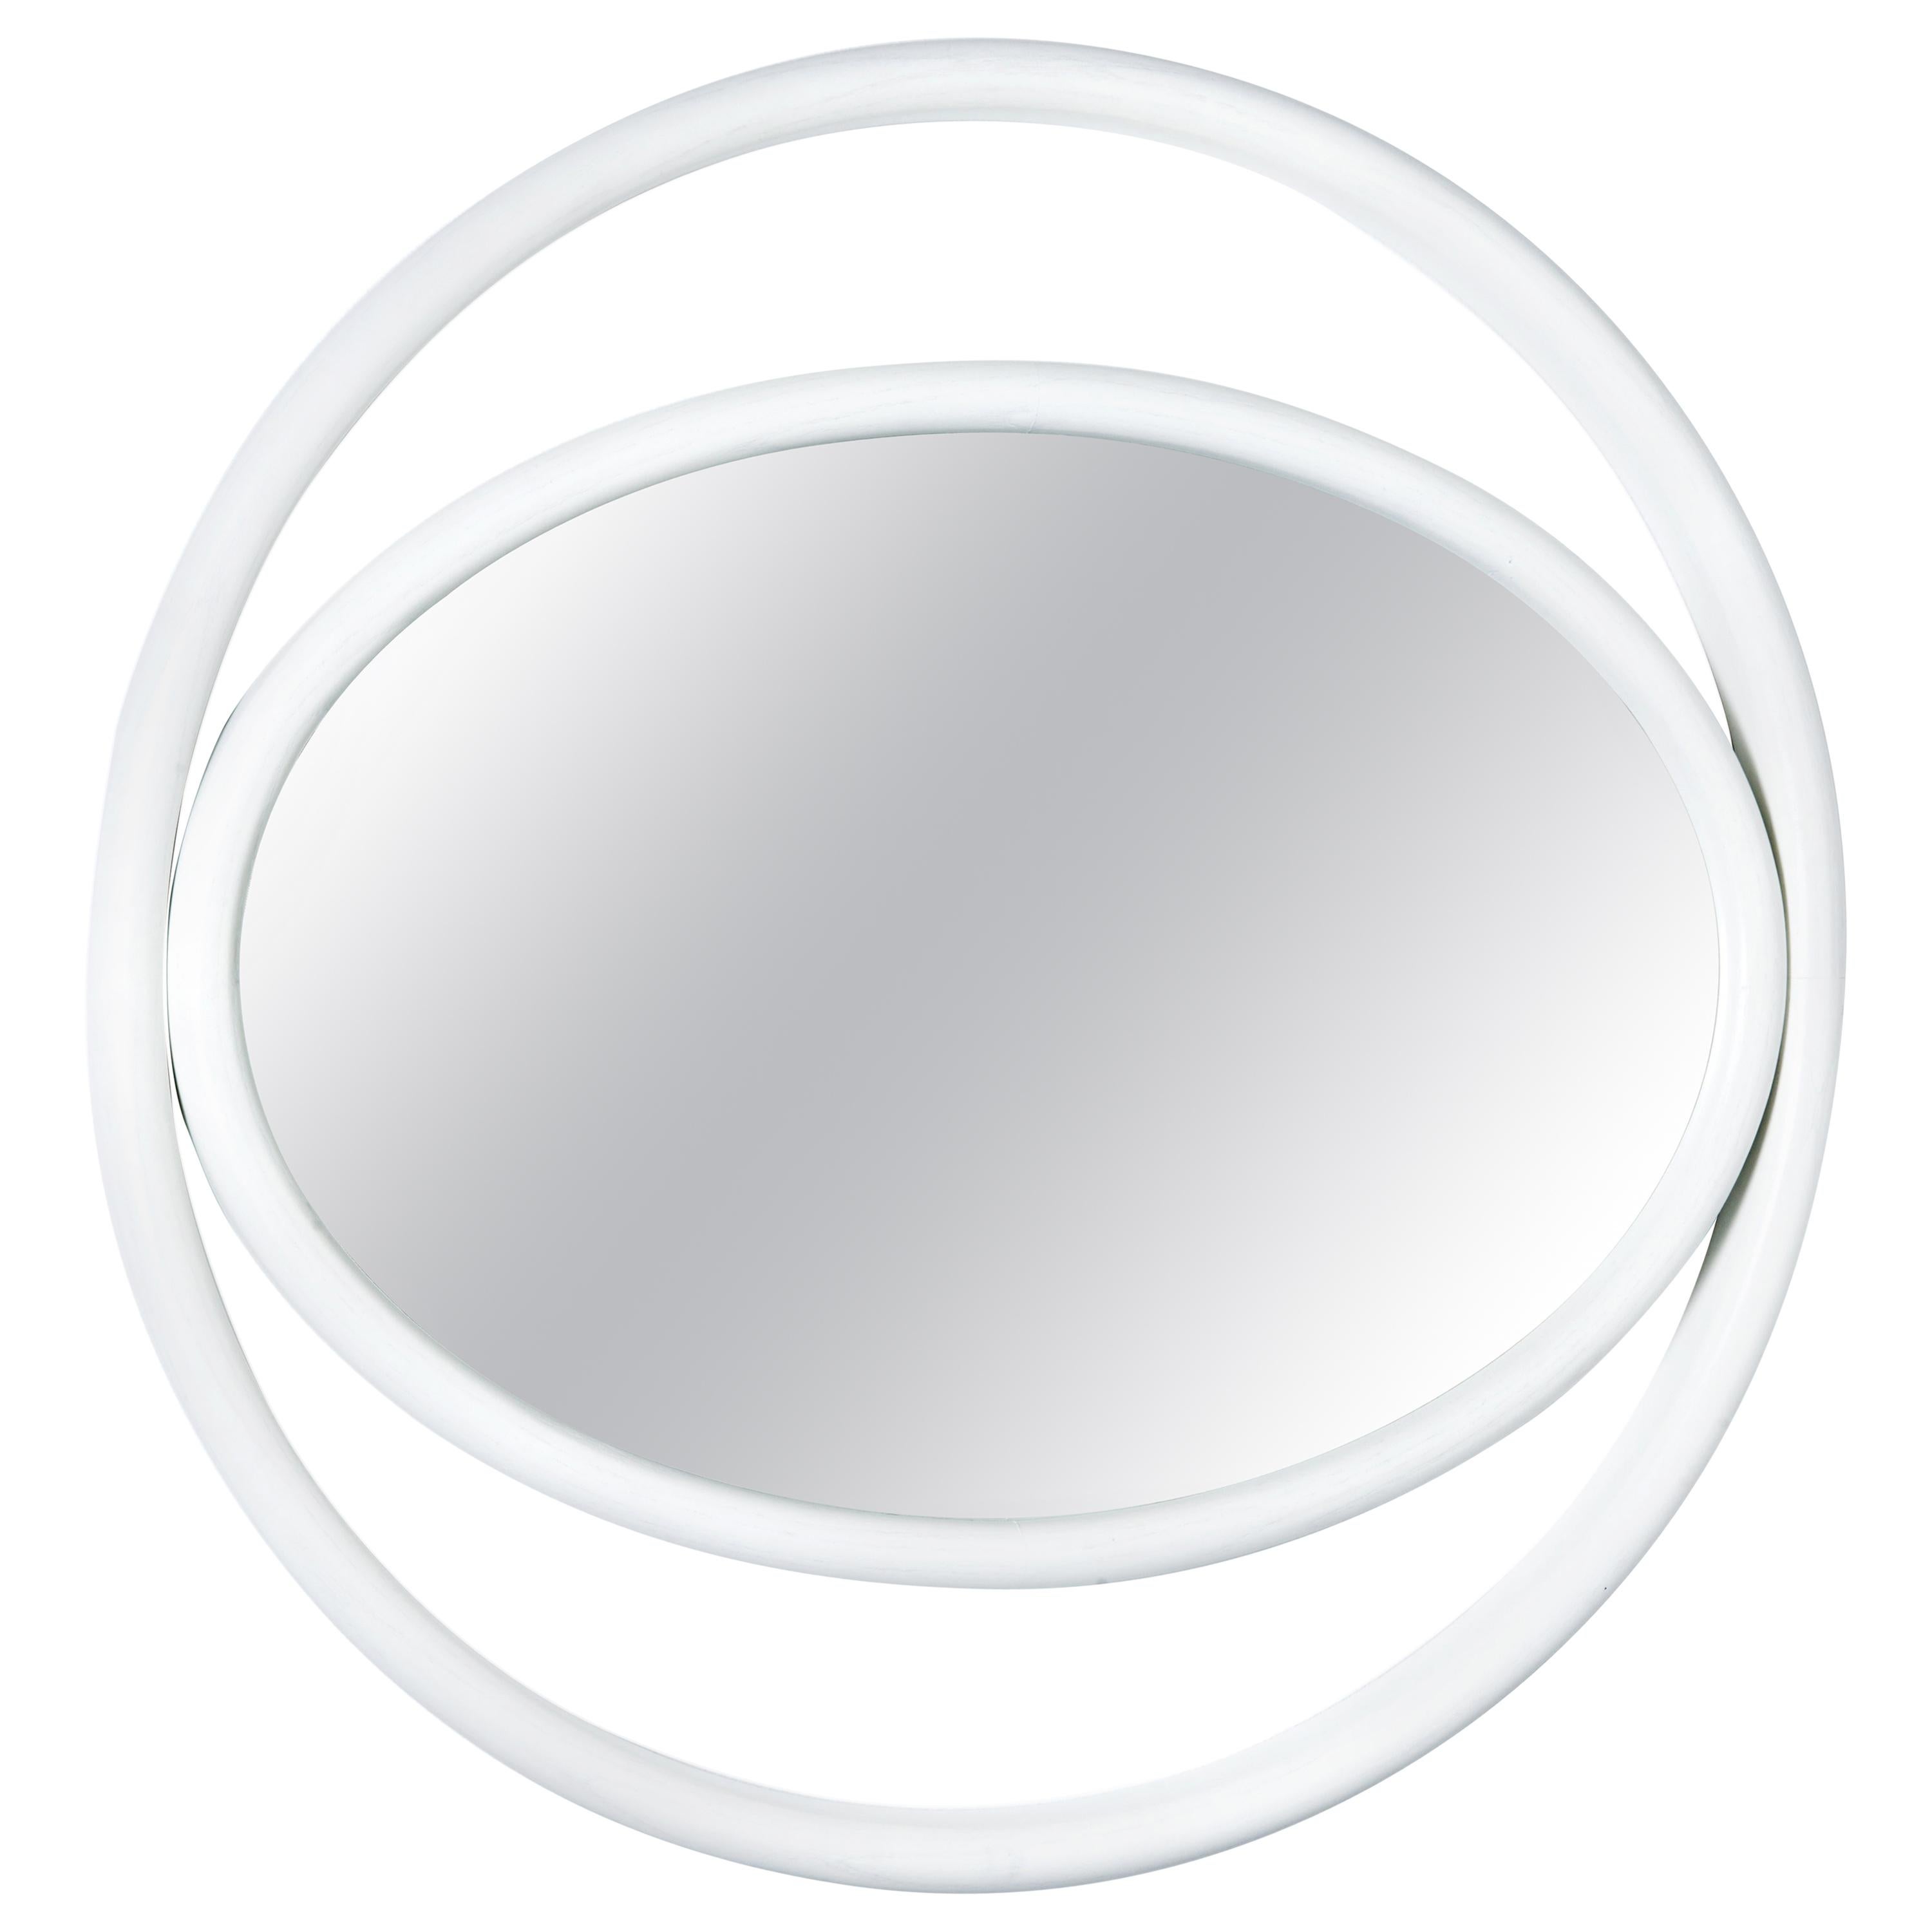 Gebrüder Thonet Vienna GmbH Eyeshine Large Circular Mirror in White with Frame